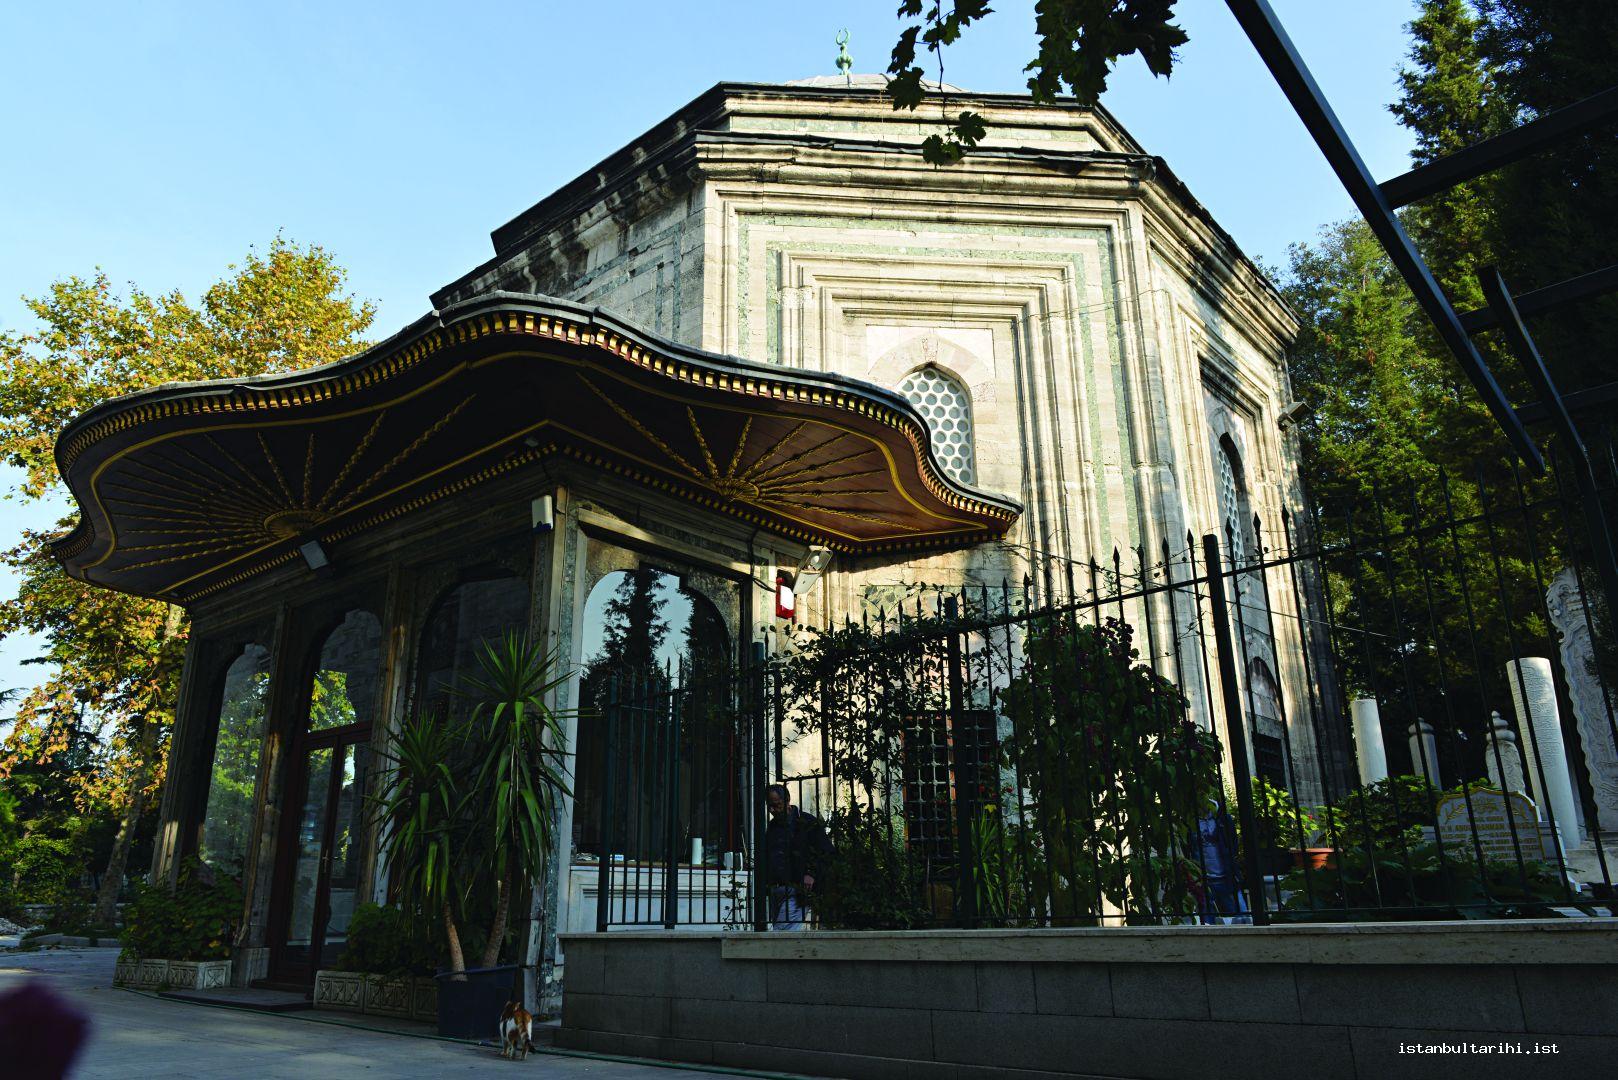 3- The tomb of Sultan Bayezit II   